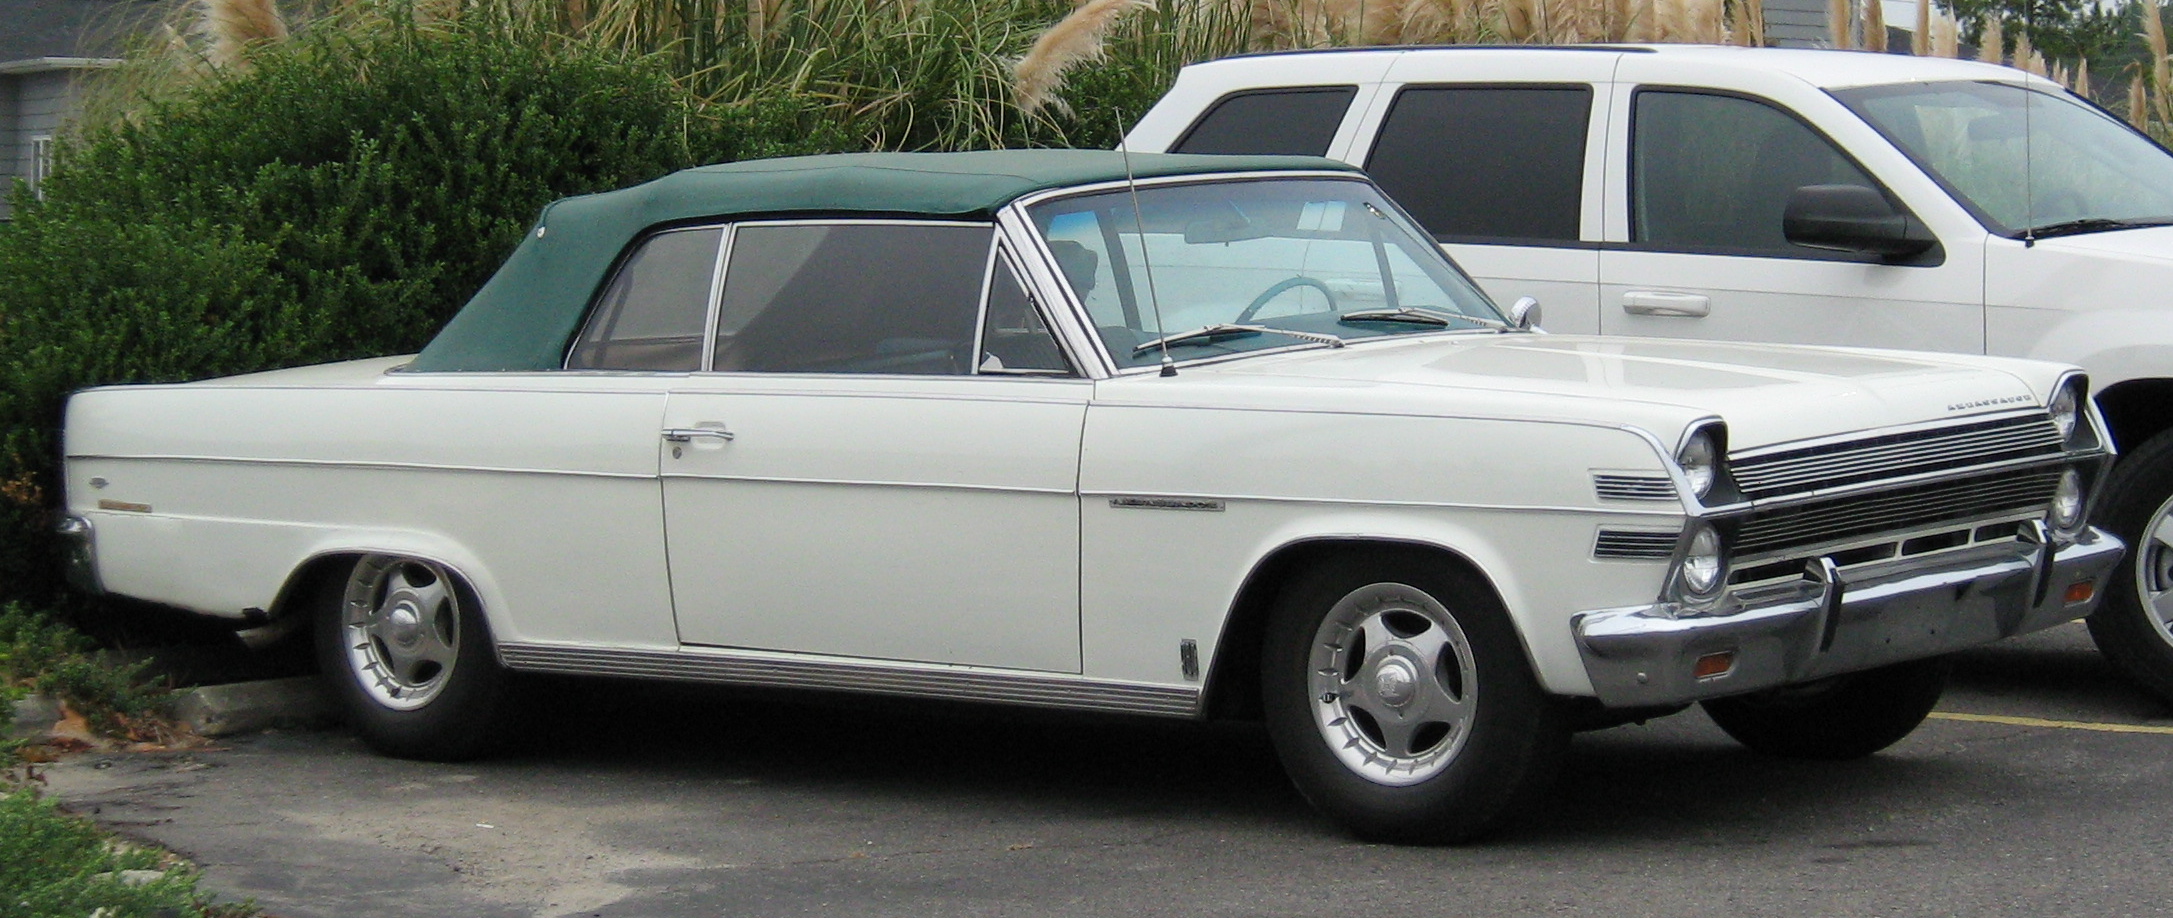 File:1966 AMC Ambassador 990 convertible white nc.jpg - Wikimedia ...